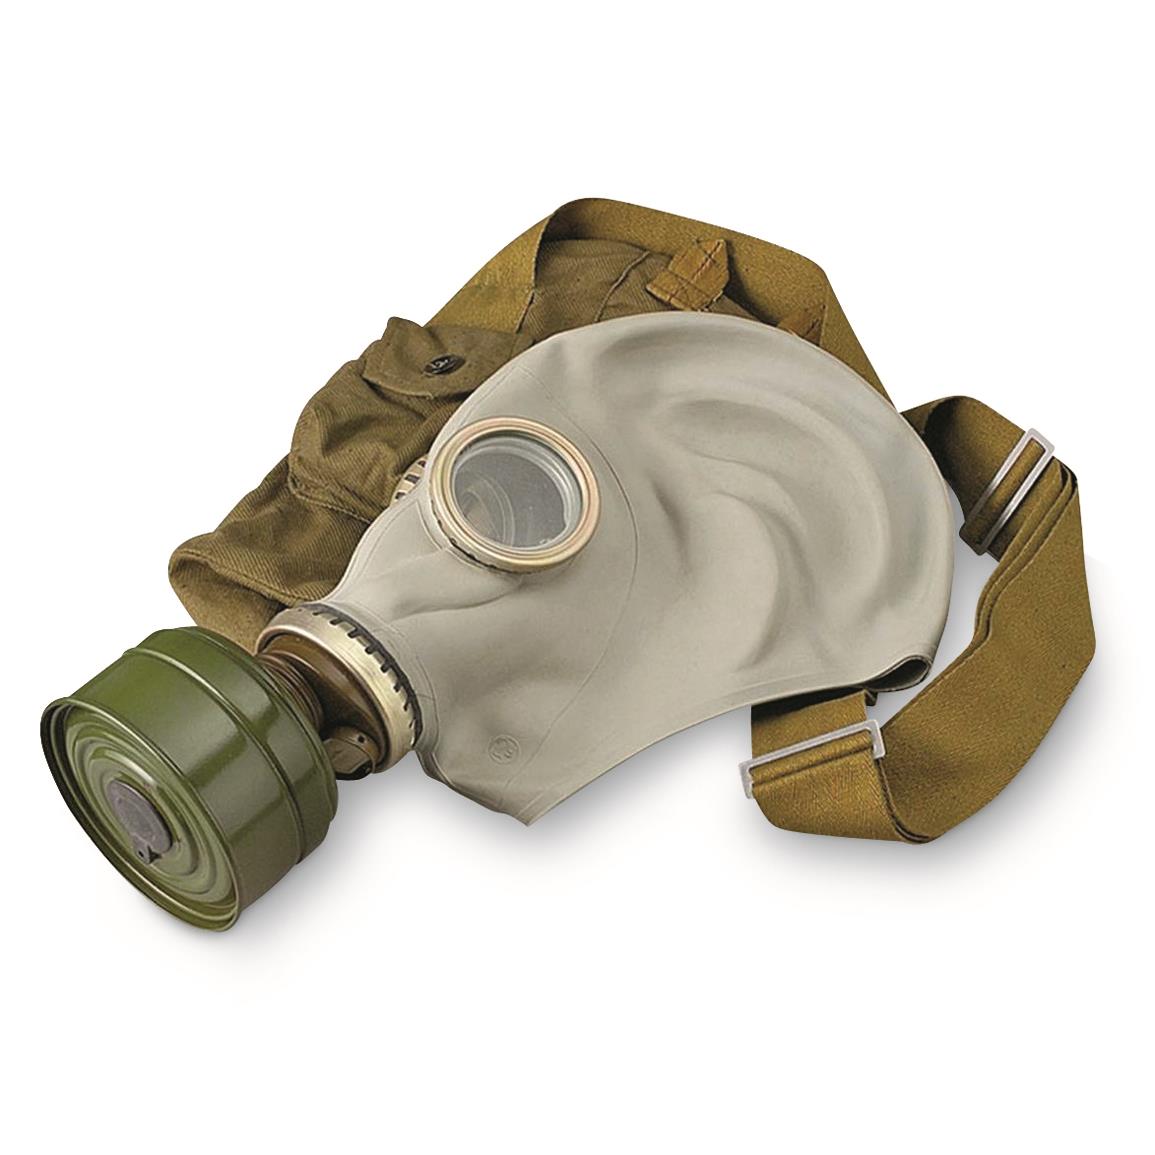 Original Mask, Filter and Bag